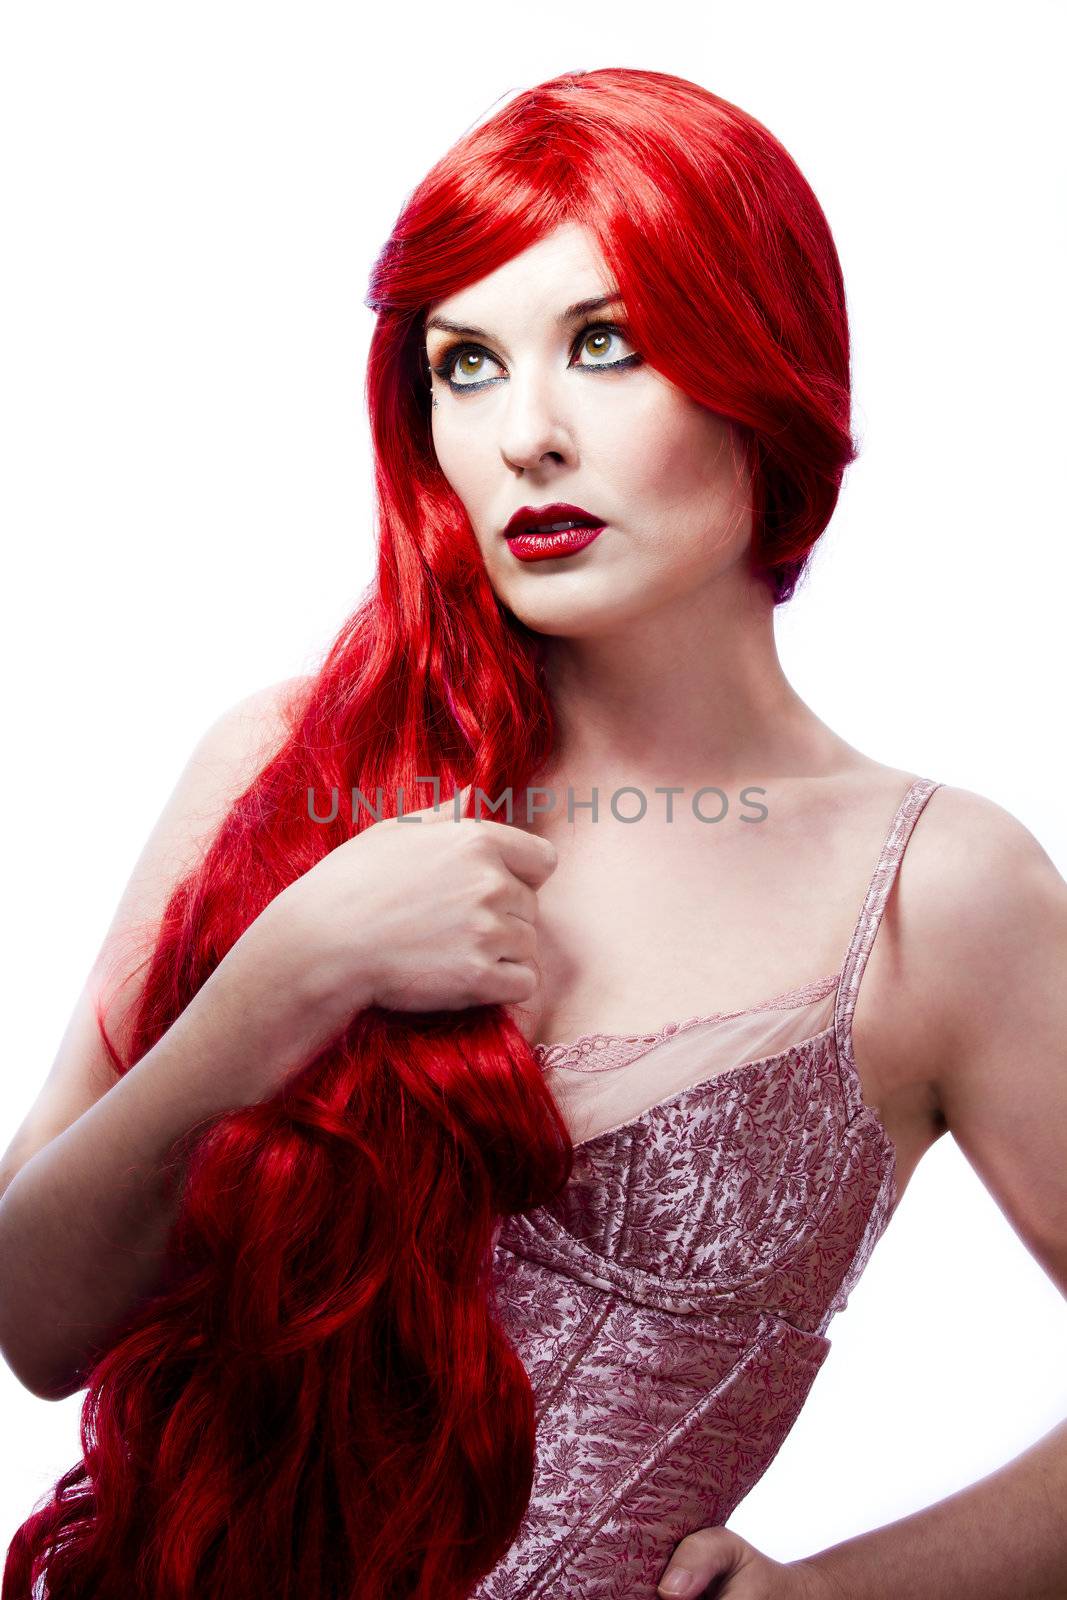 Wavy Red Hair woman. Fashion Girl Portrait. glamorous dress by FernandoCortes